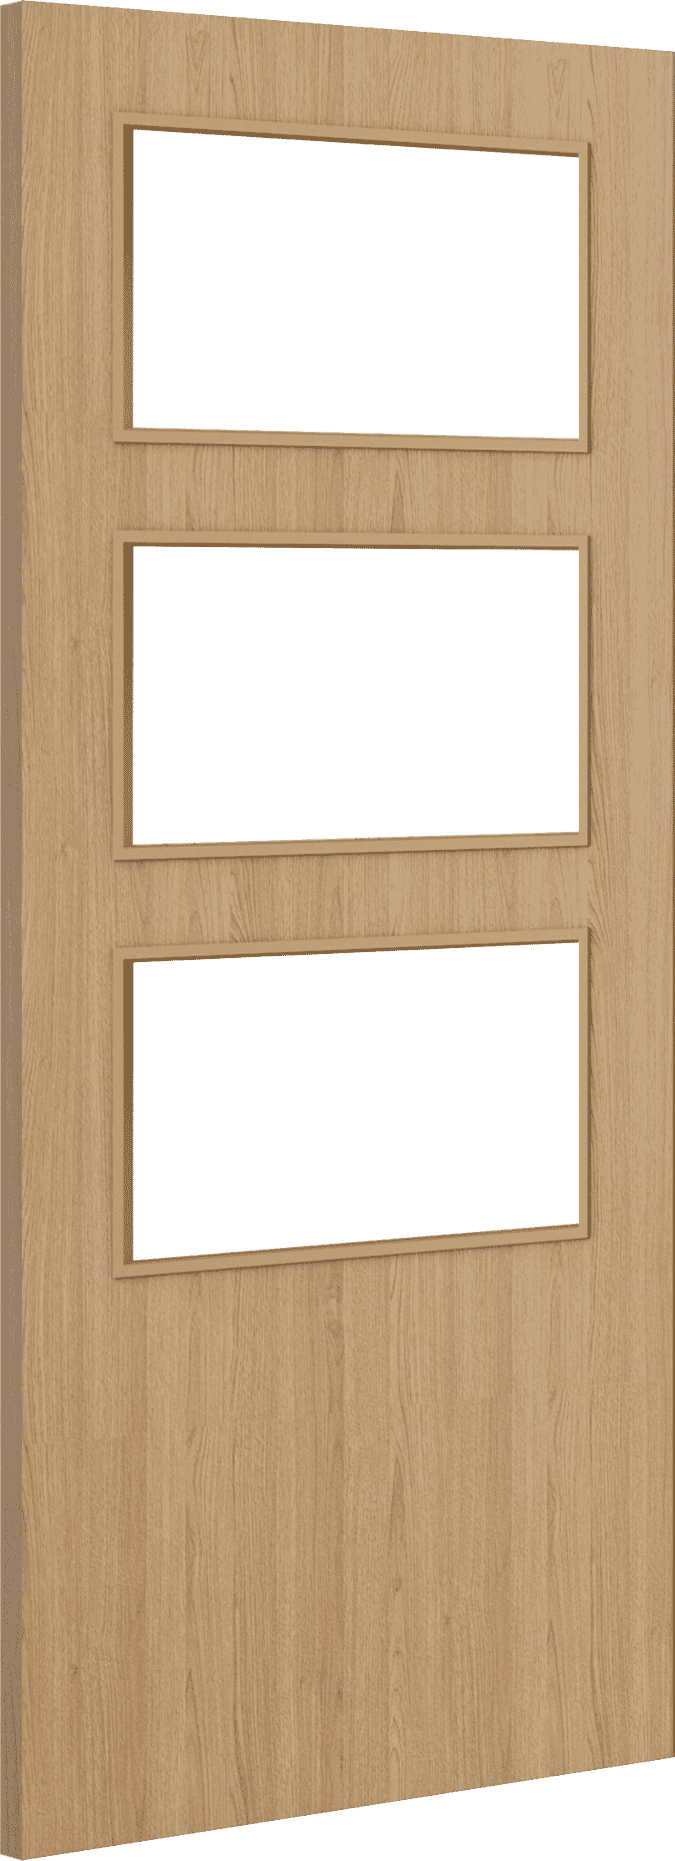 2032mm x 813mm x 44mm (32") Architectural Oak 03 Frosted Glazed - Prefinished FD30 Fire Door Blank